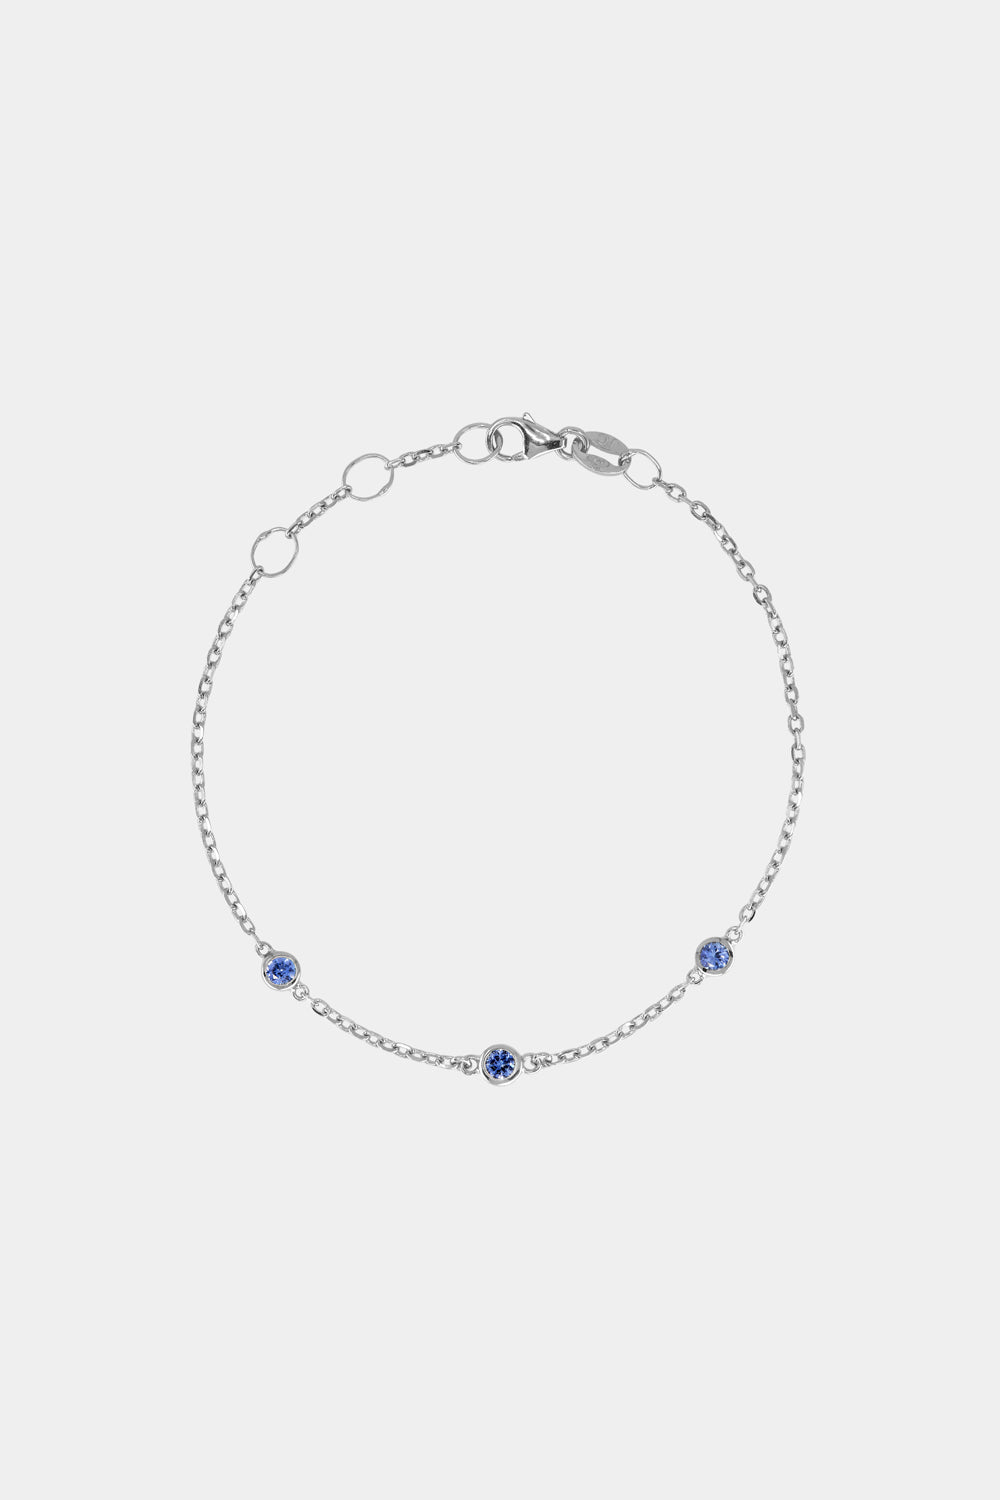 Blue Sapphire Gemstone With CZ Oval Normal Cut Prong Set Tennis Bracelet –  Saksham Gems